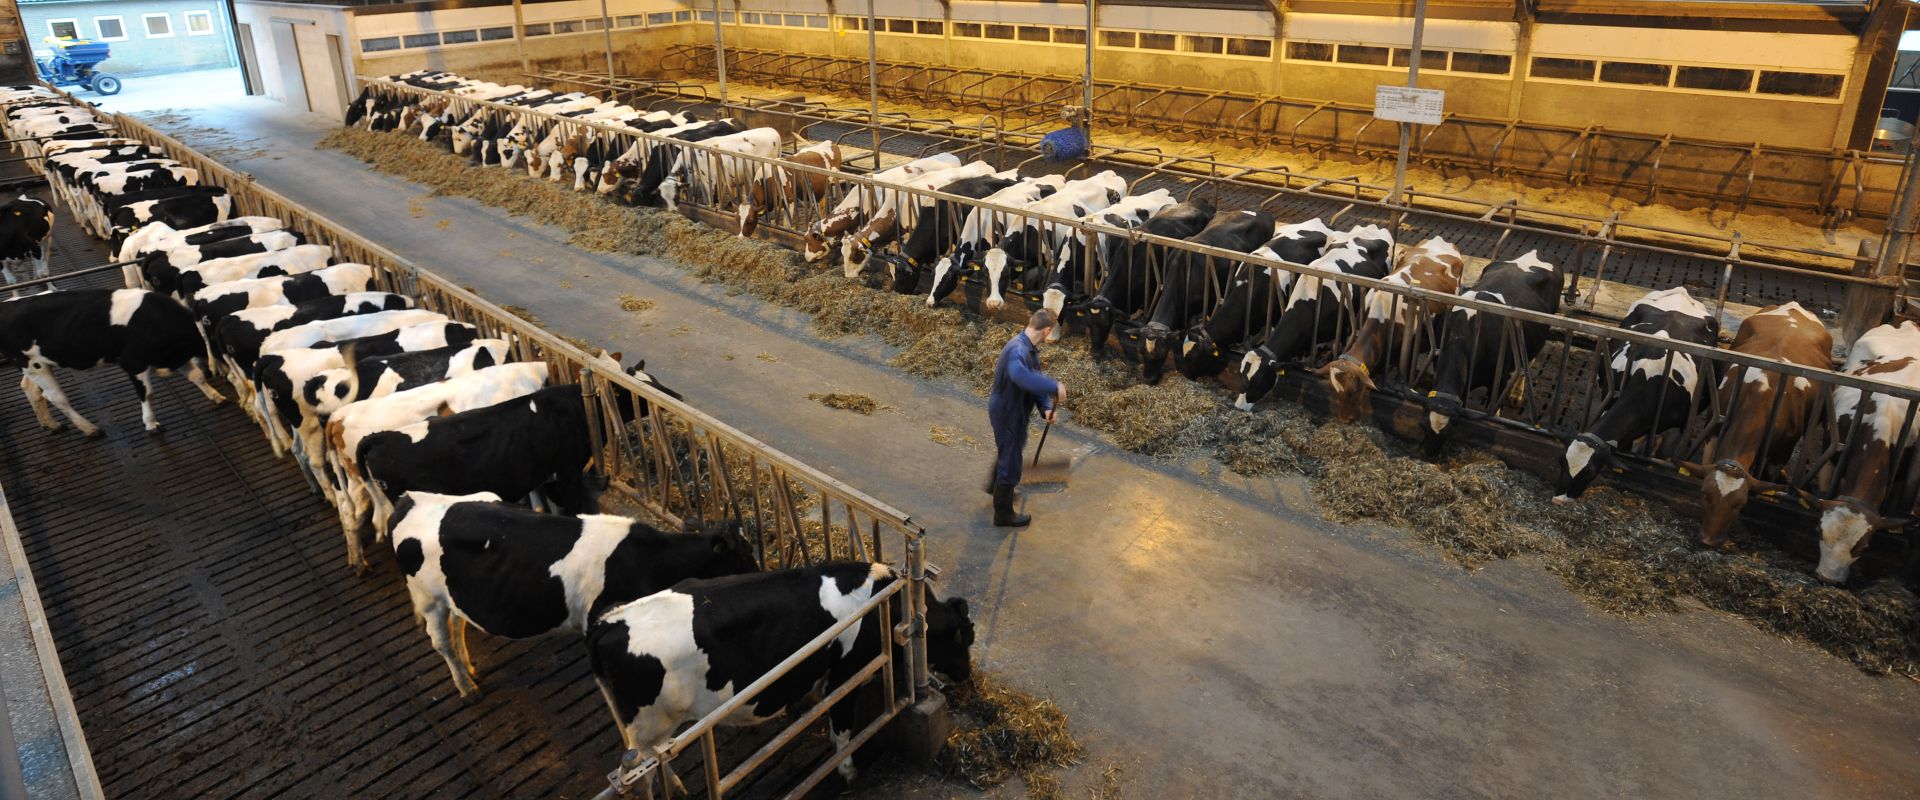 Dairy farming and entrepreneurship